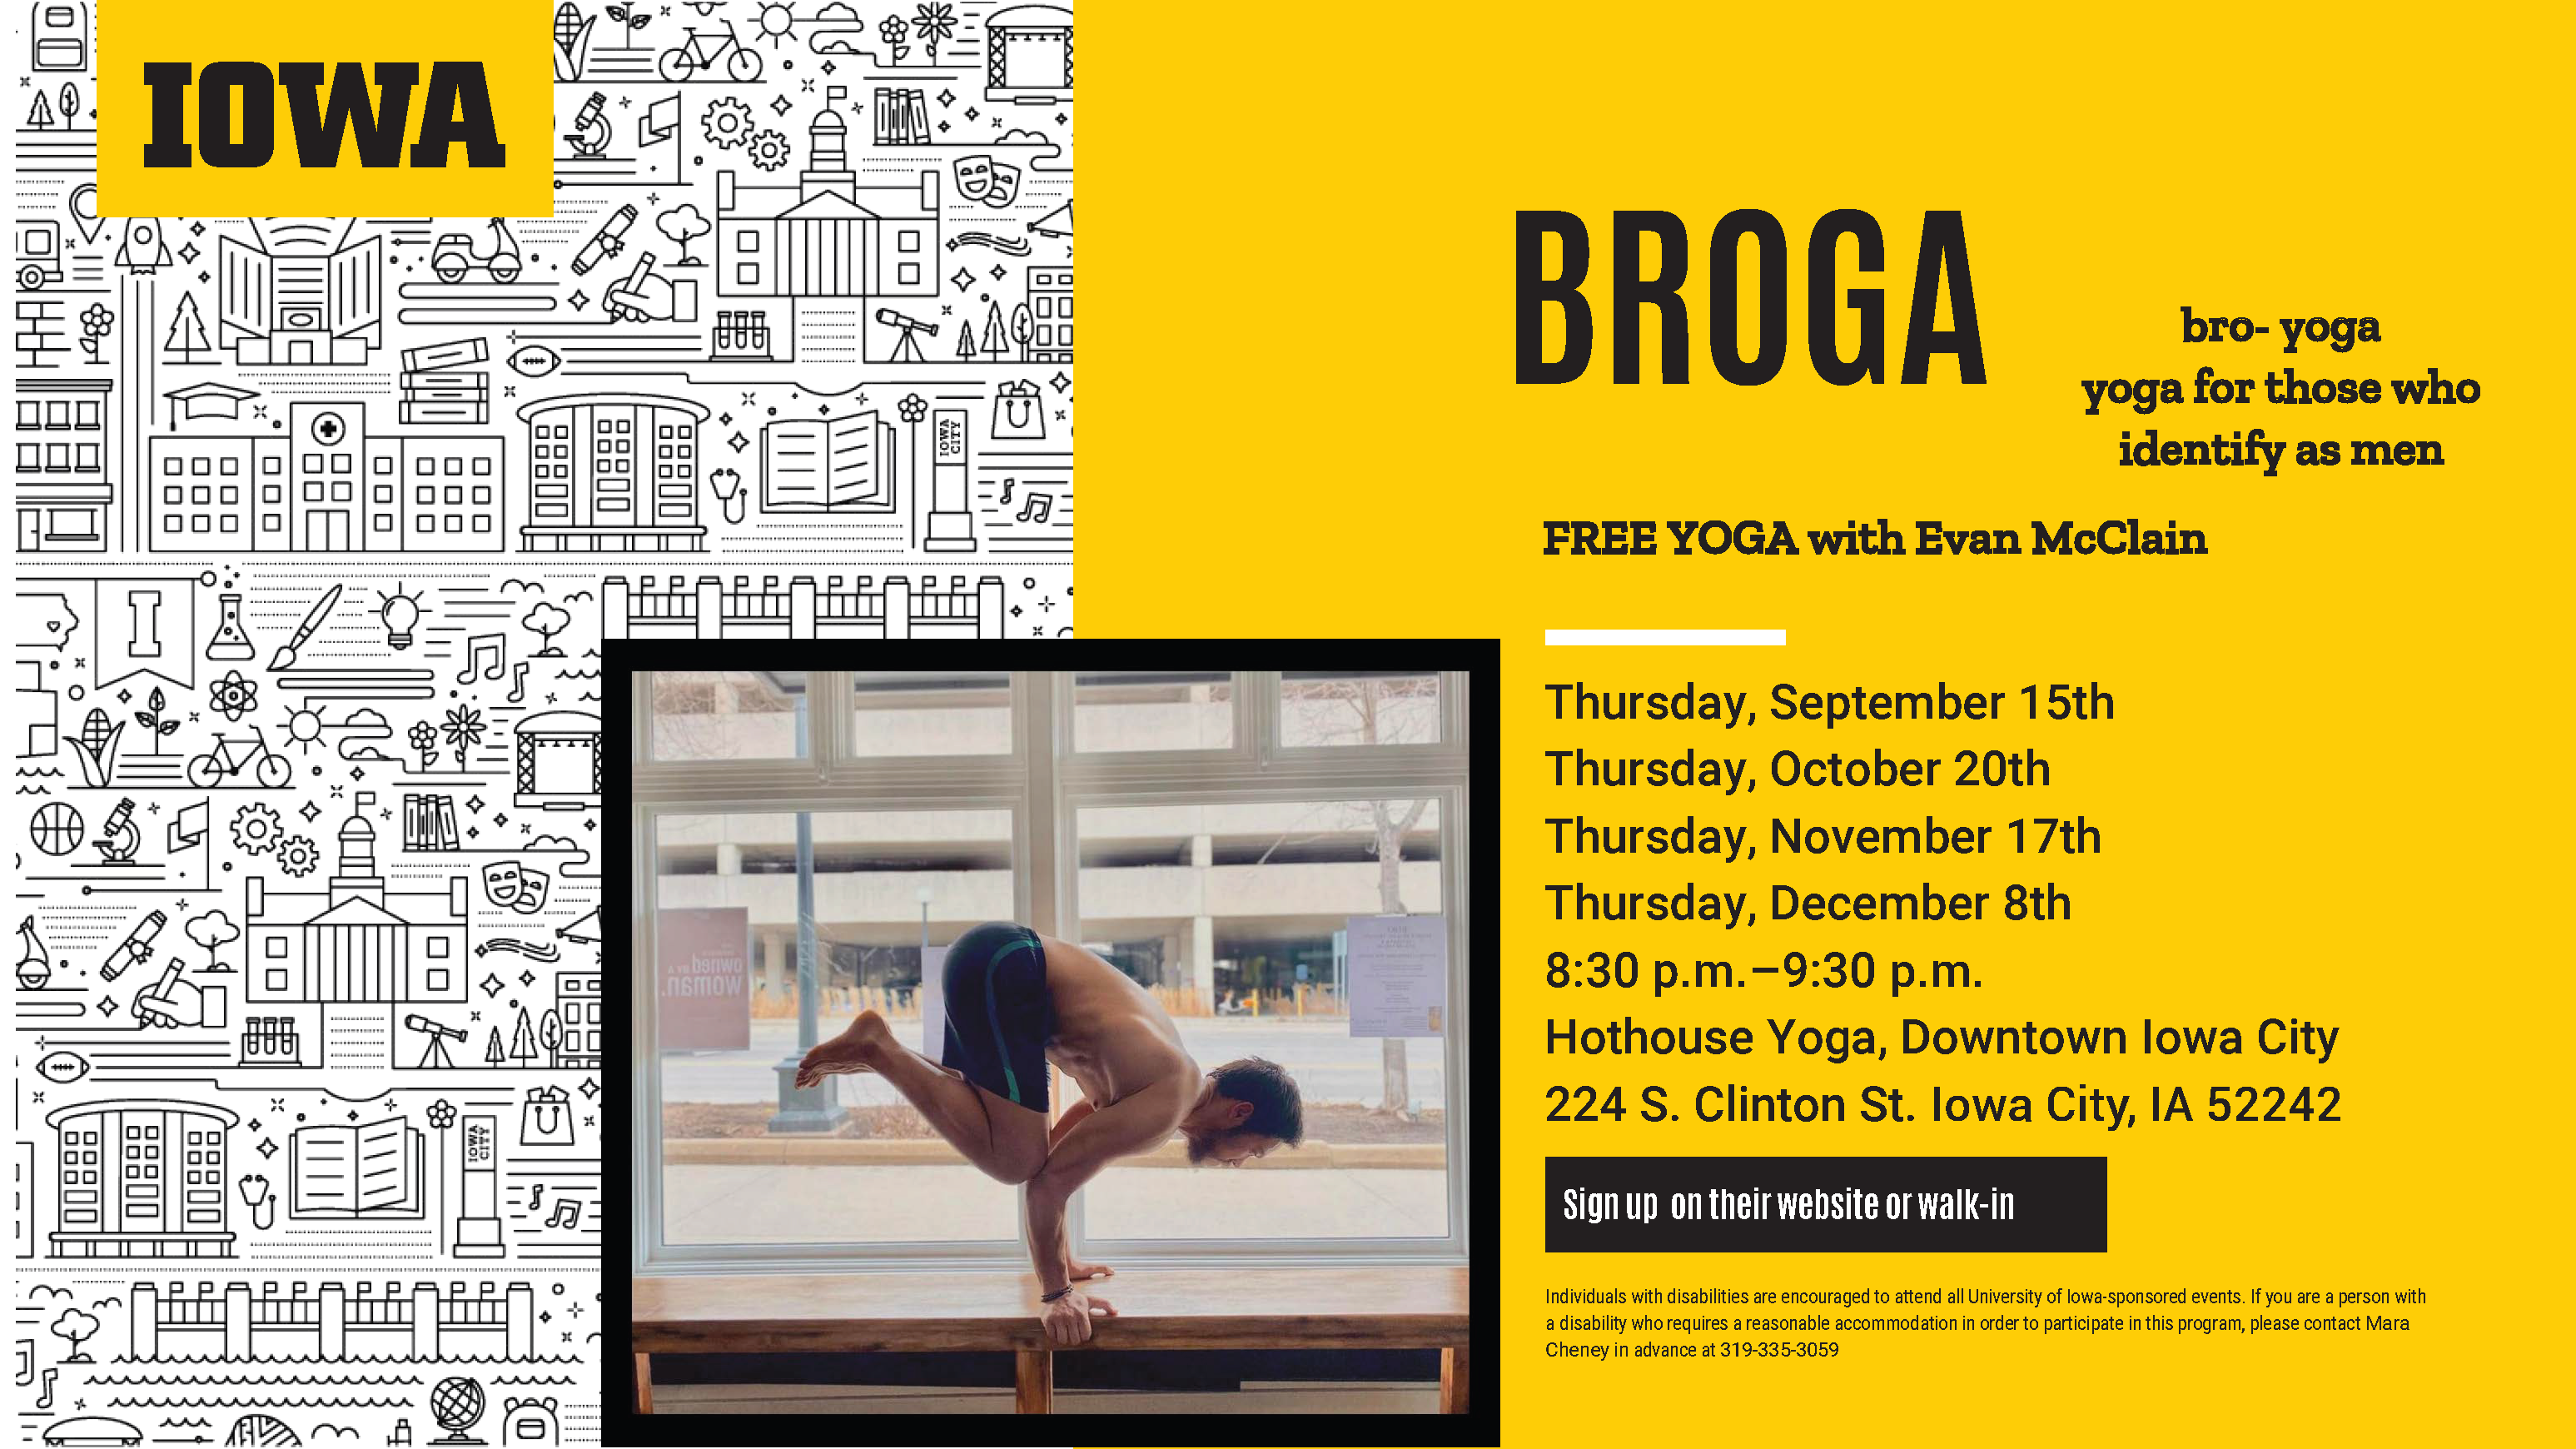 Broga promotional image